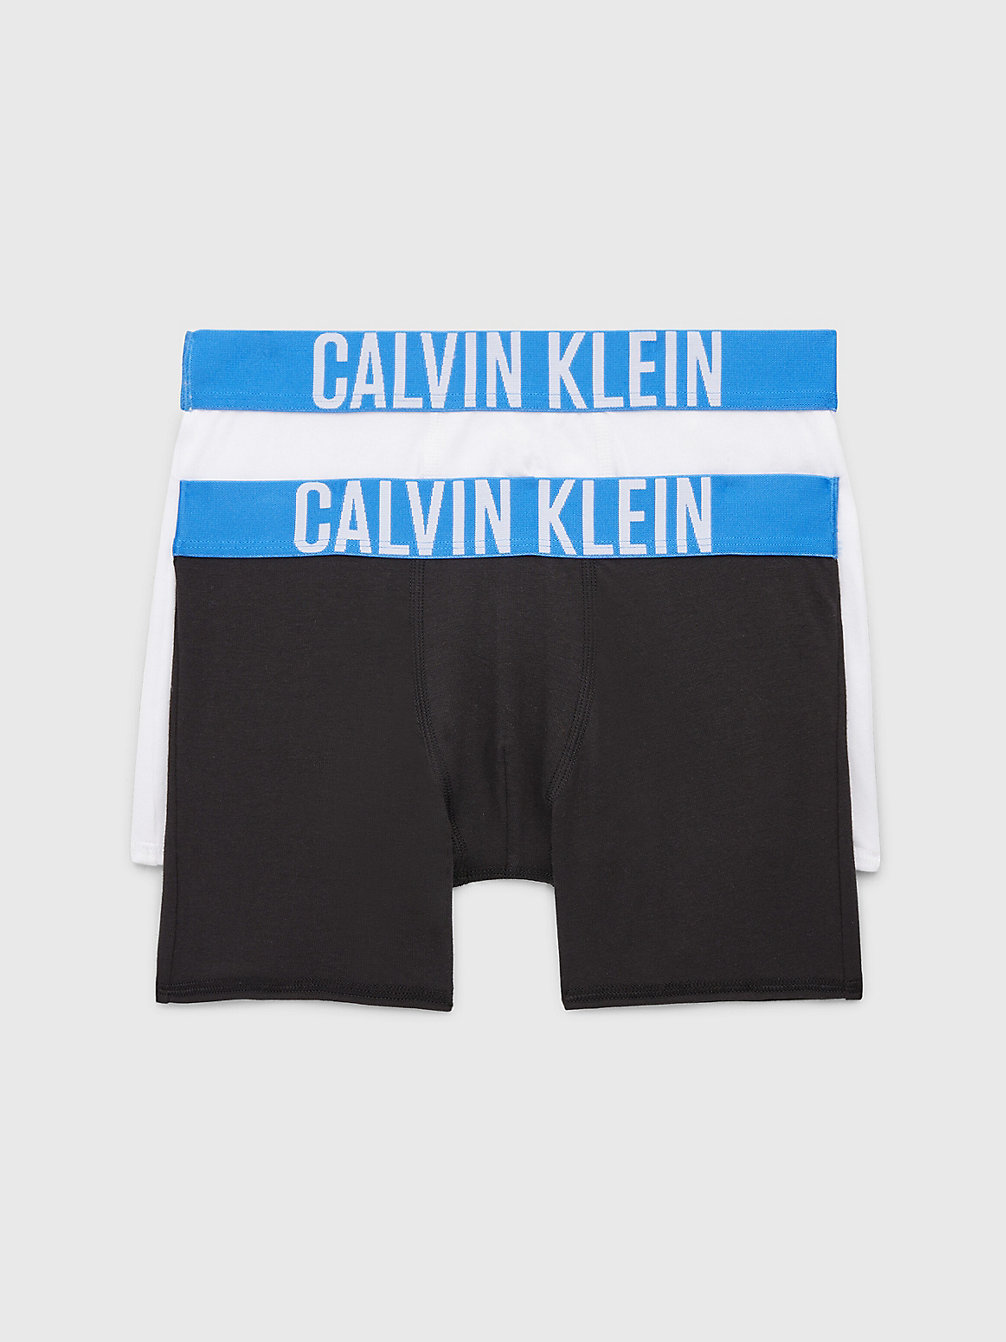 PVHBLACK/PVHWHITE Lot De 2 Boxers Pour Garçon - Intense Power undefined boys Calvin Klein